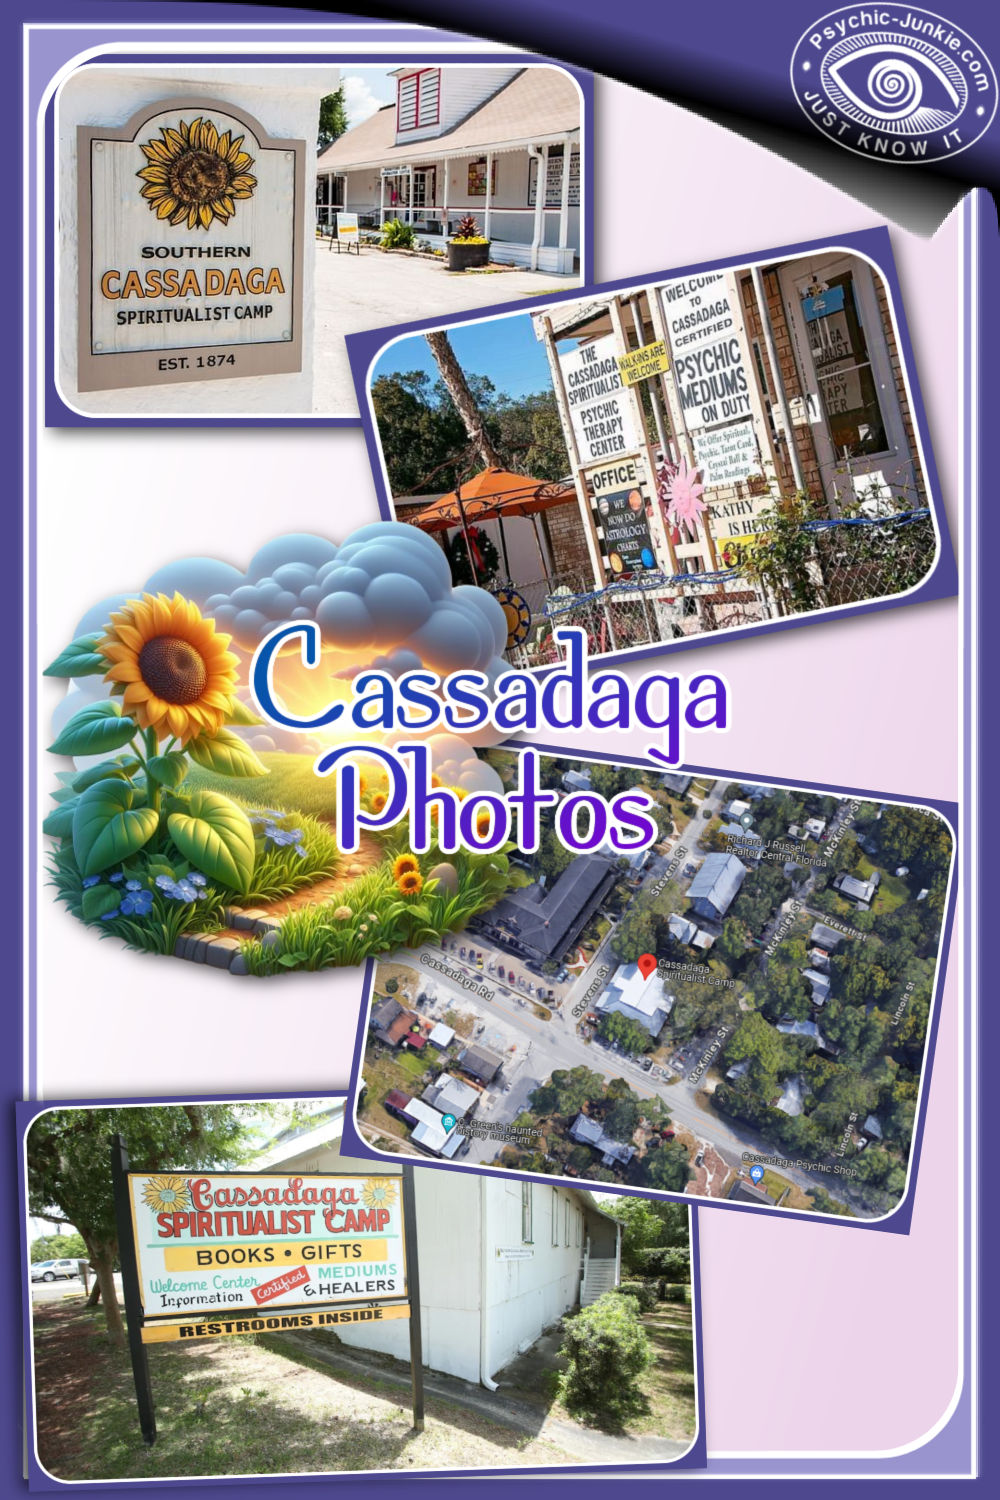 Cassadaga Spiritual Camp Photos